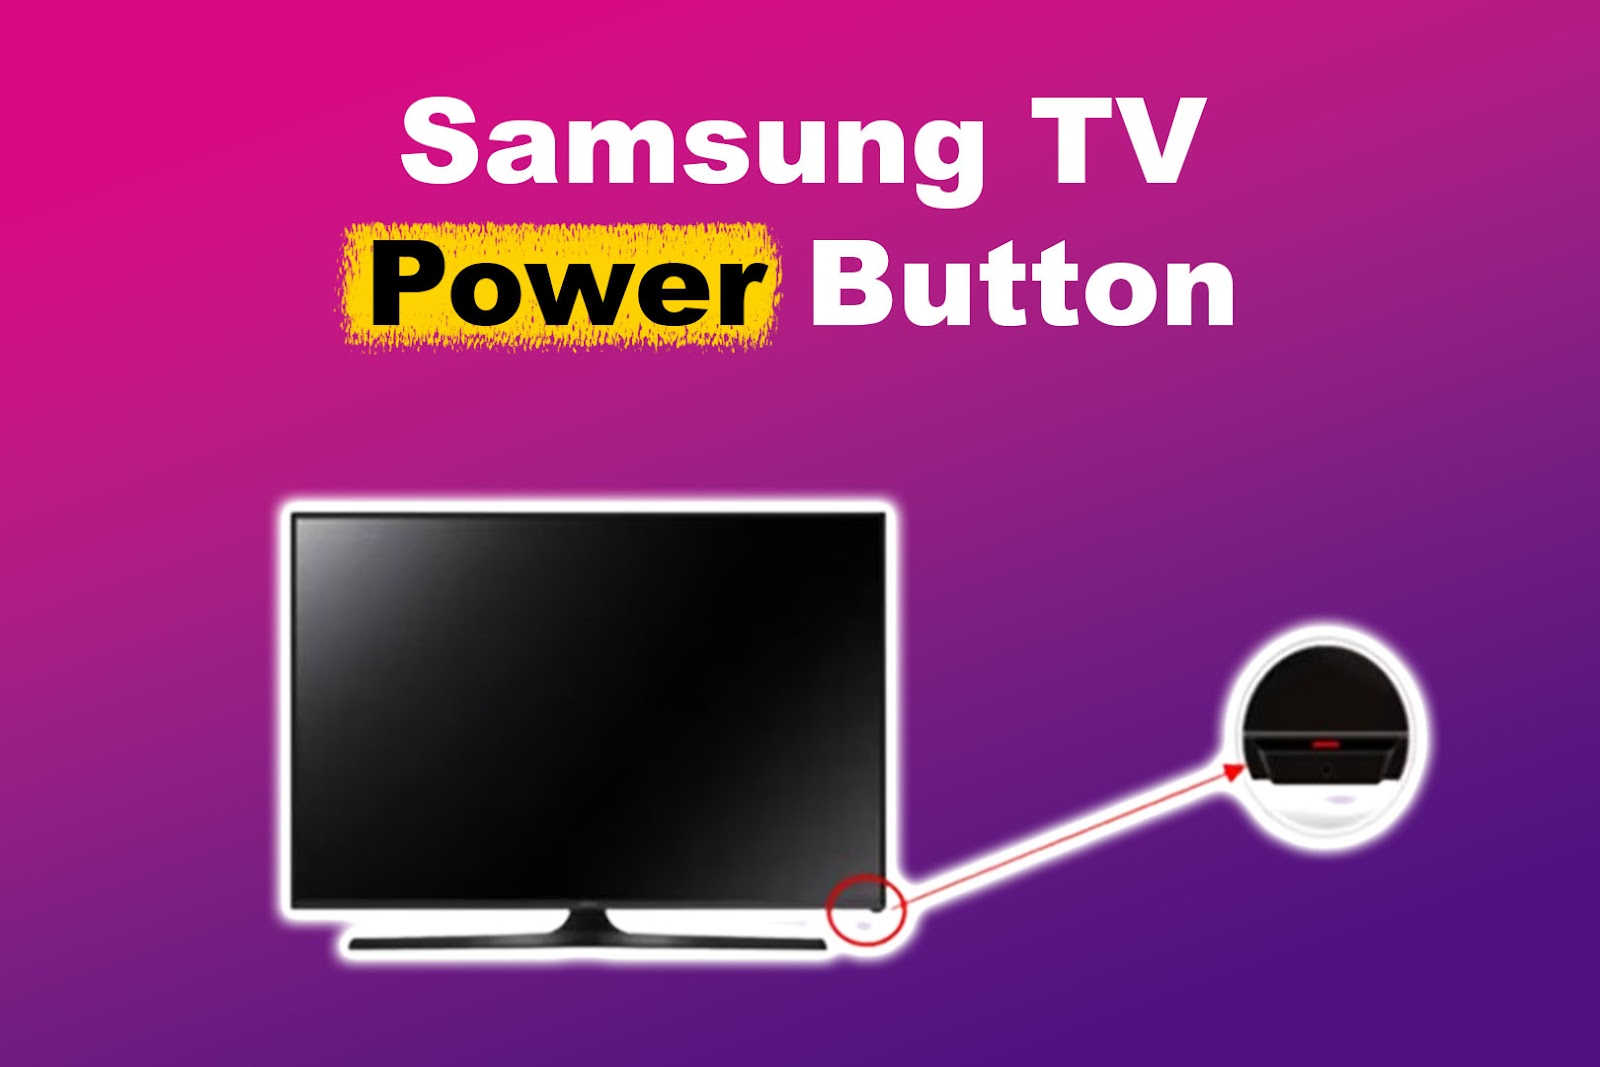 Samsung TV Power Button